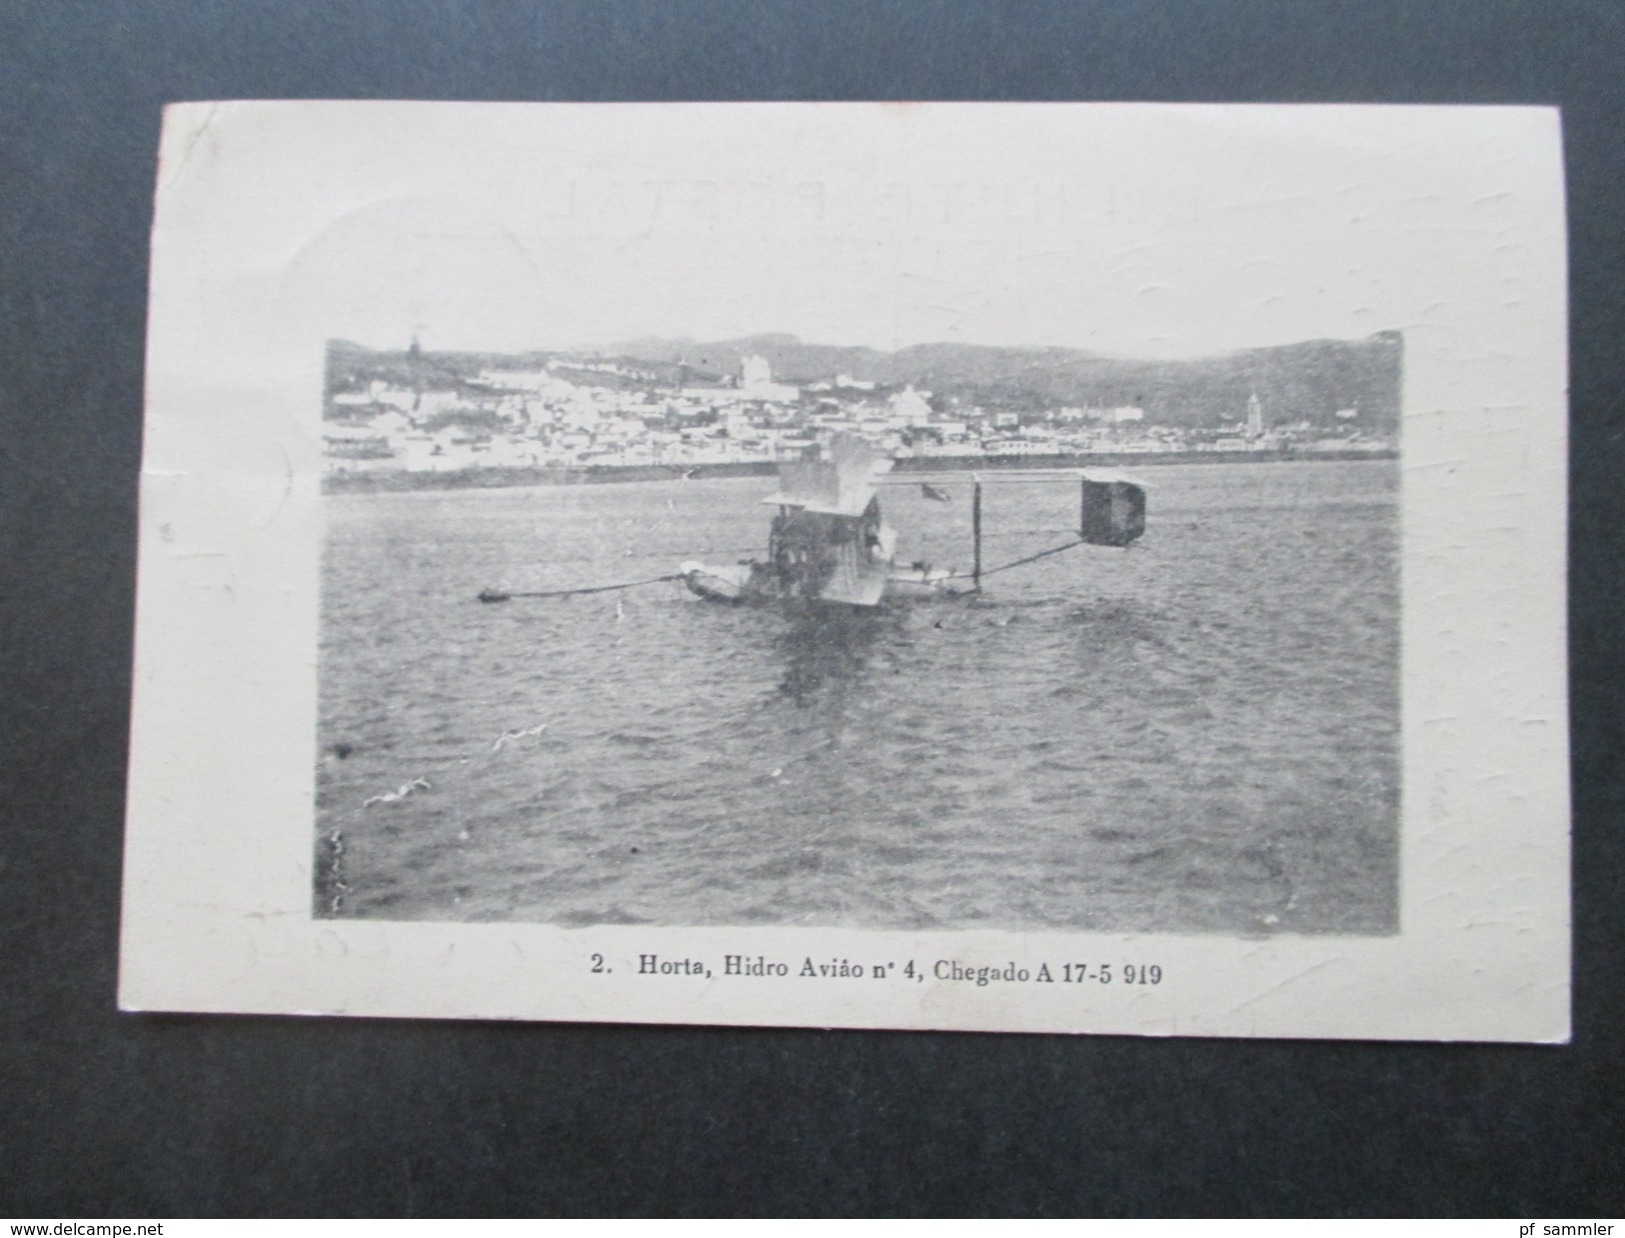 AK/Echtfoto Wasserflugzeug. Acores / Azoren 1910/20er Jahre!Nach Zoppot Danzig. Horta, Hidro Aviao N4 Chegado A 17-5 919 - 1919-1938: Interbellum